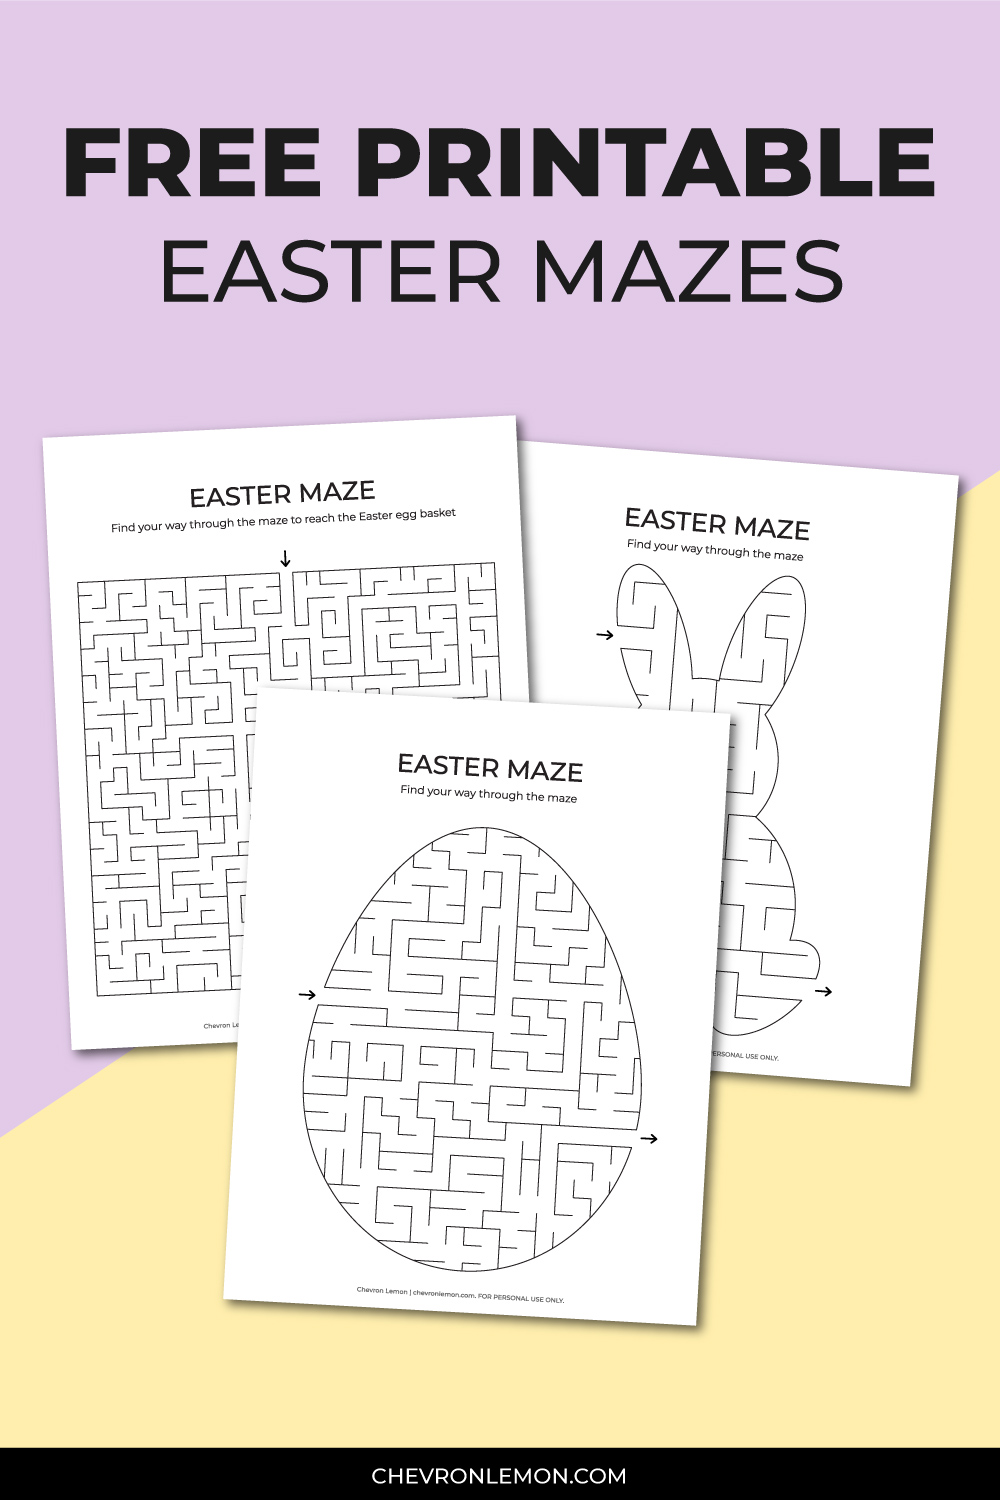 Easter mazes